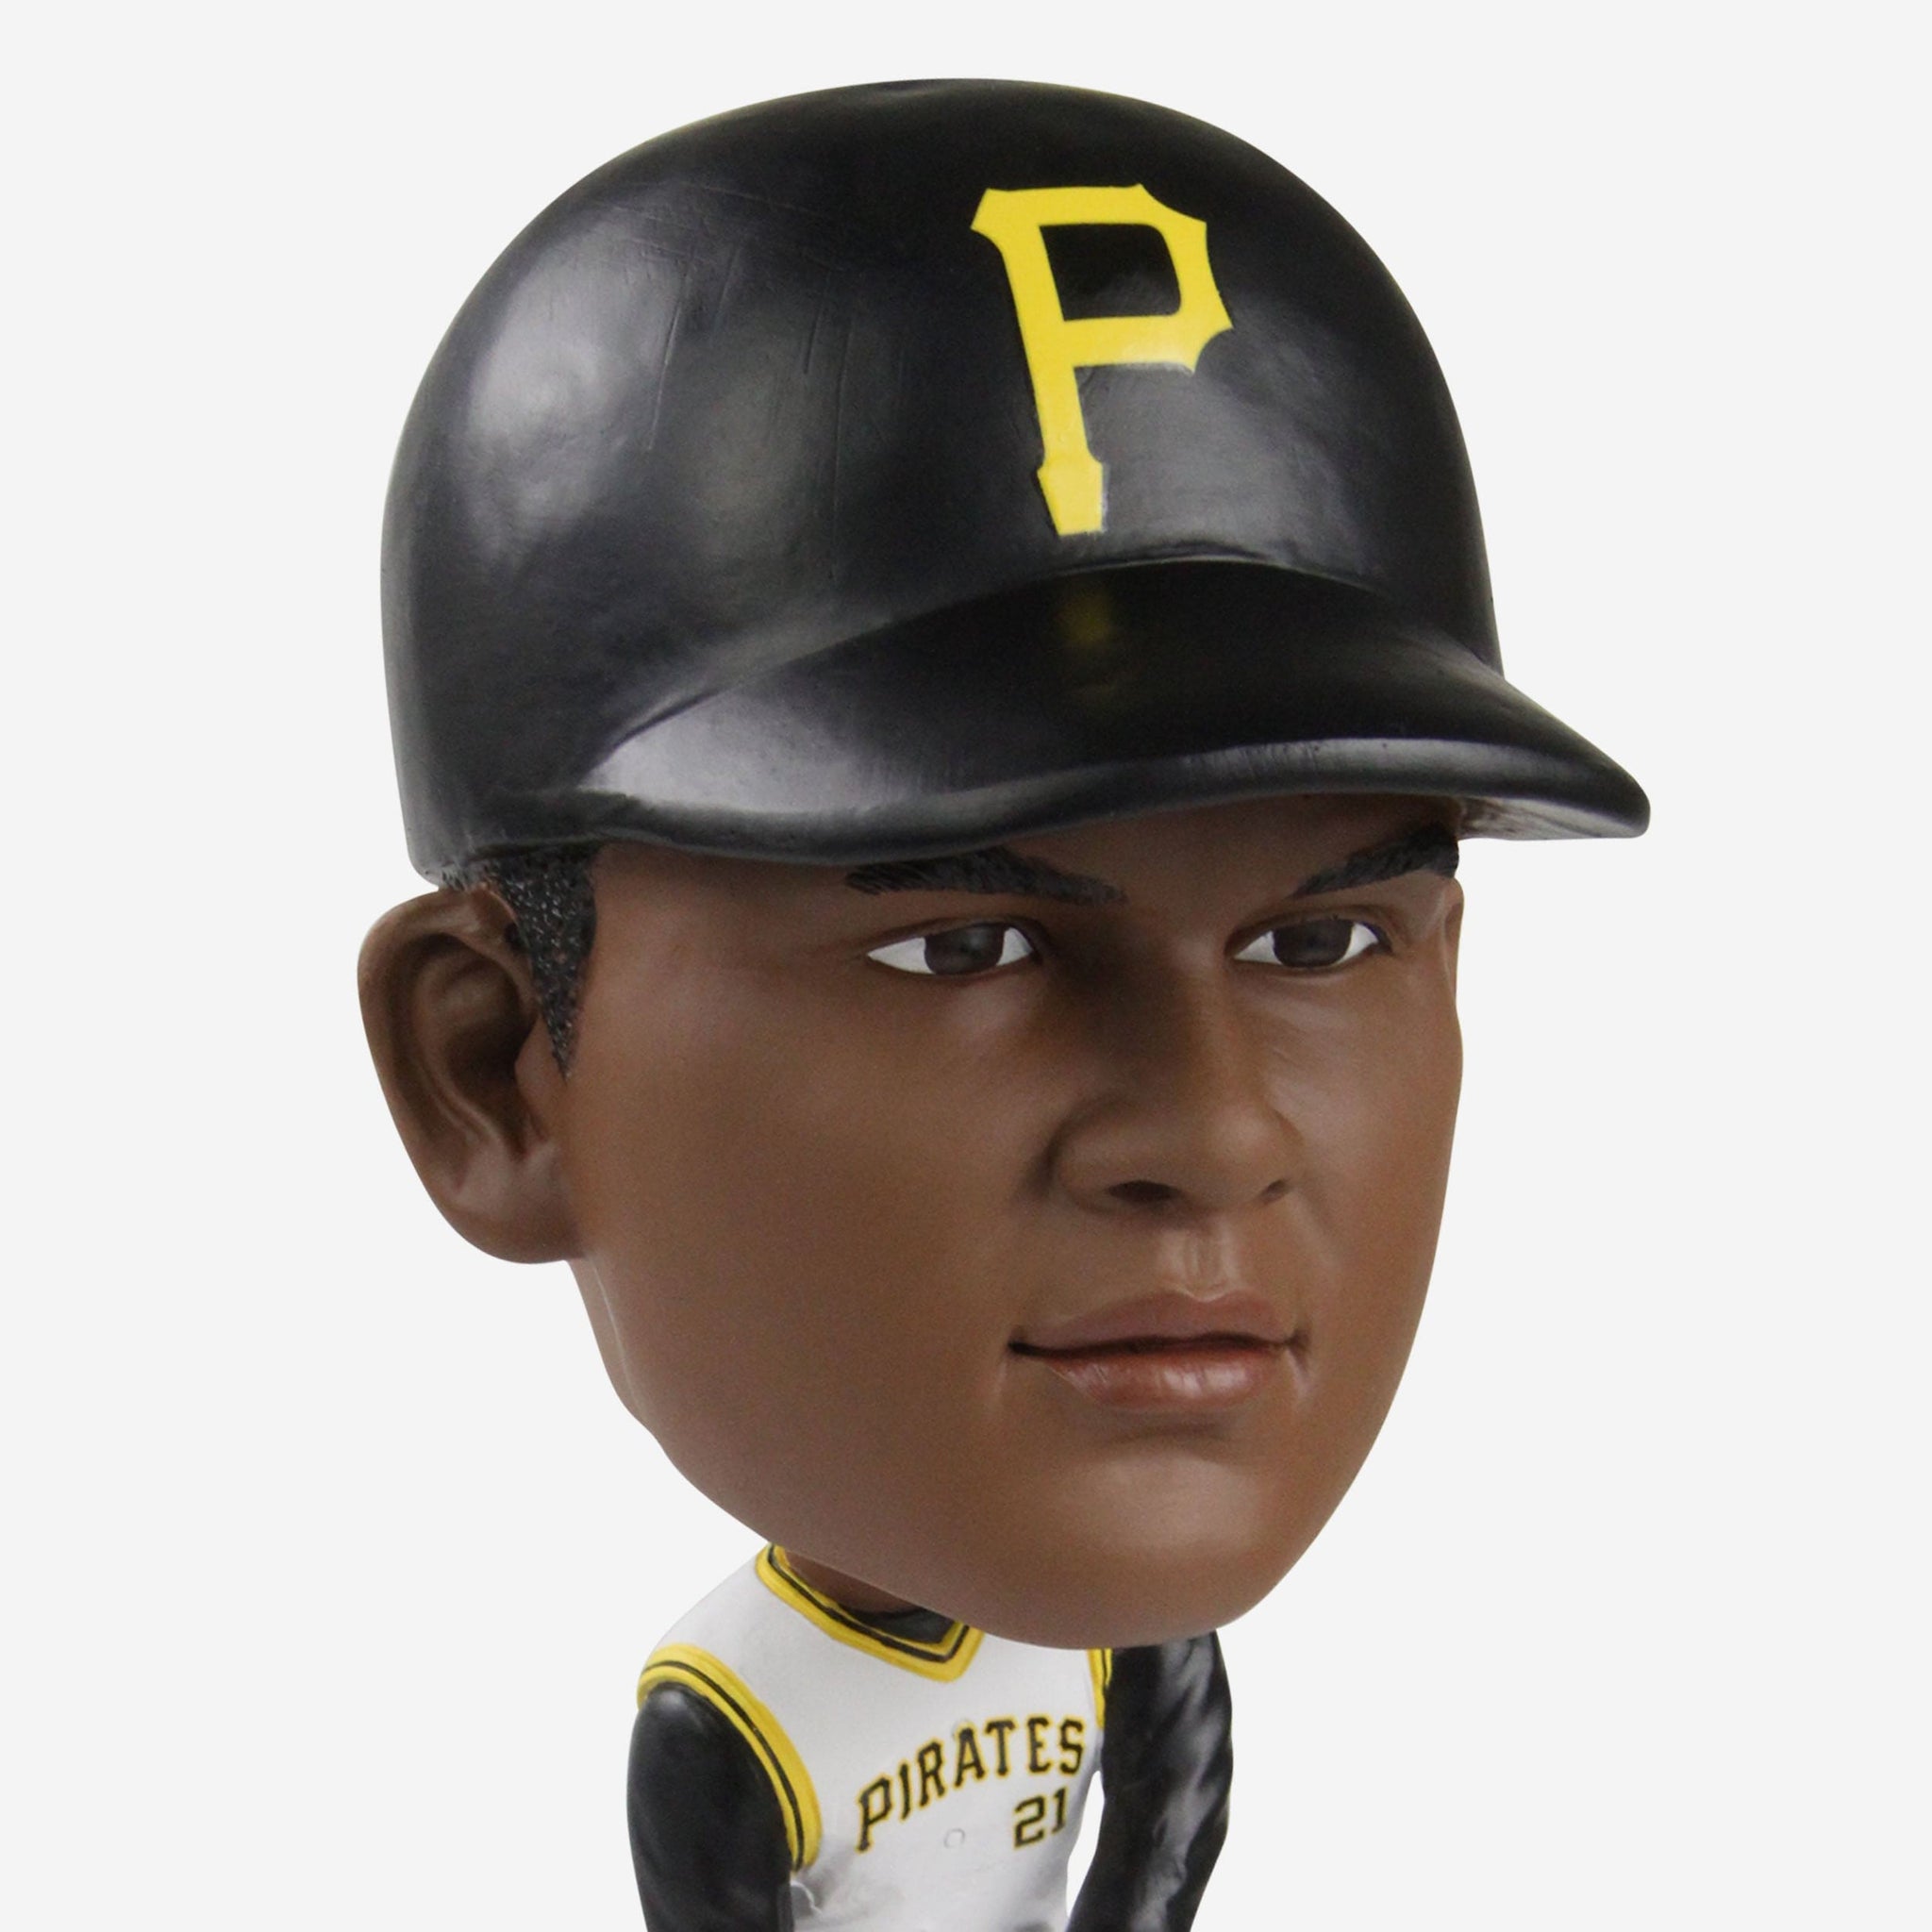 Pittsburgh Pirates Roberto Clemente 21 Adult Jersey SGA XL